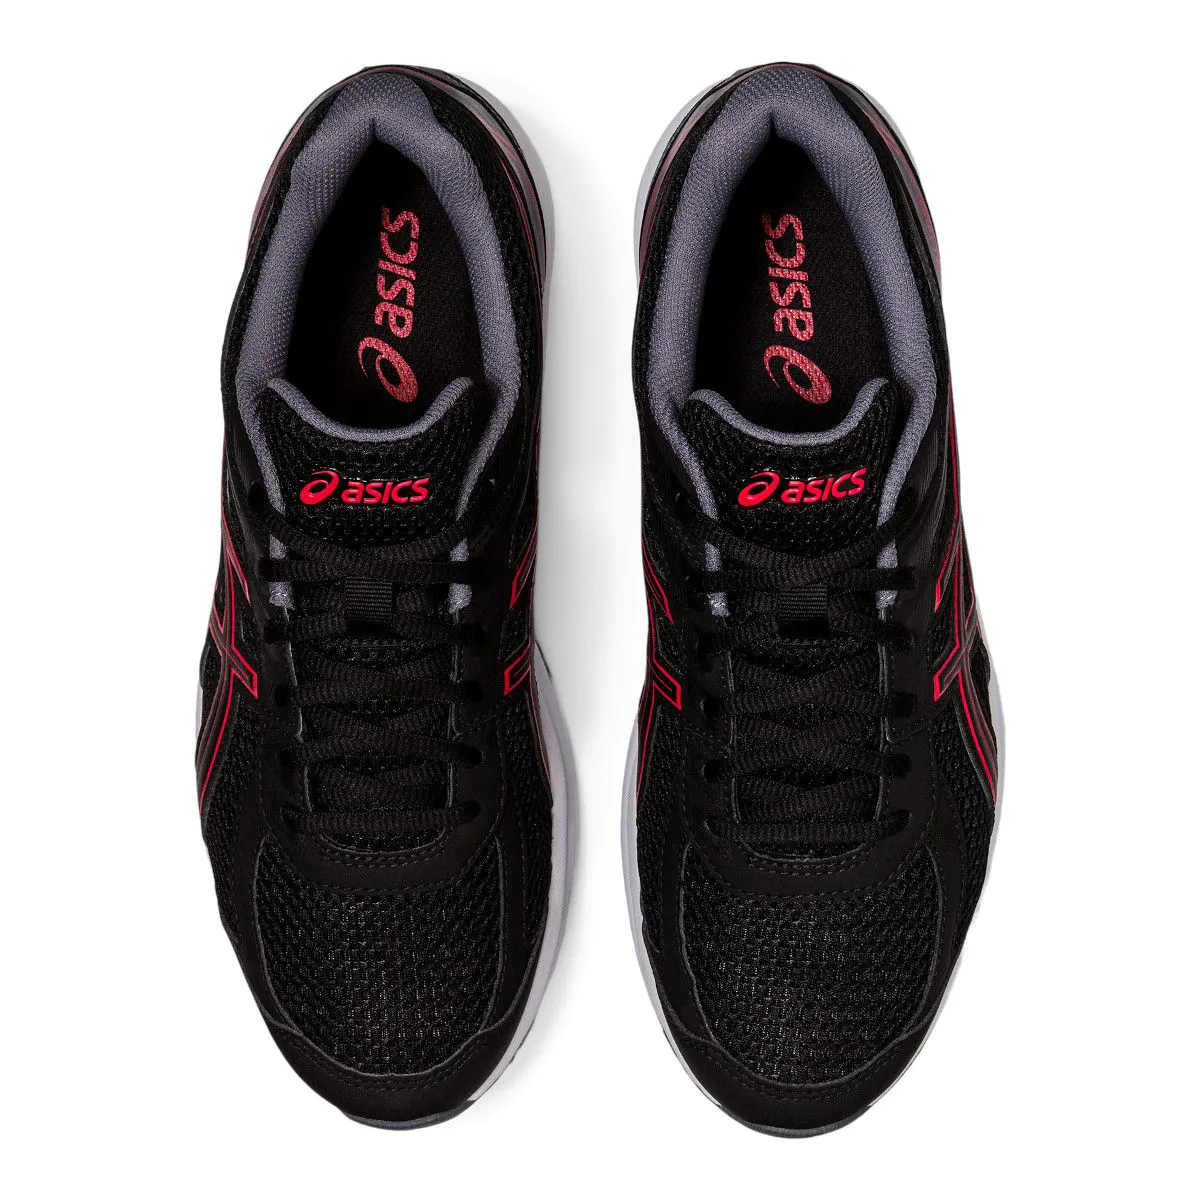 Asics GEL Braid Men's Running Shoes 1011A738-002